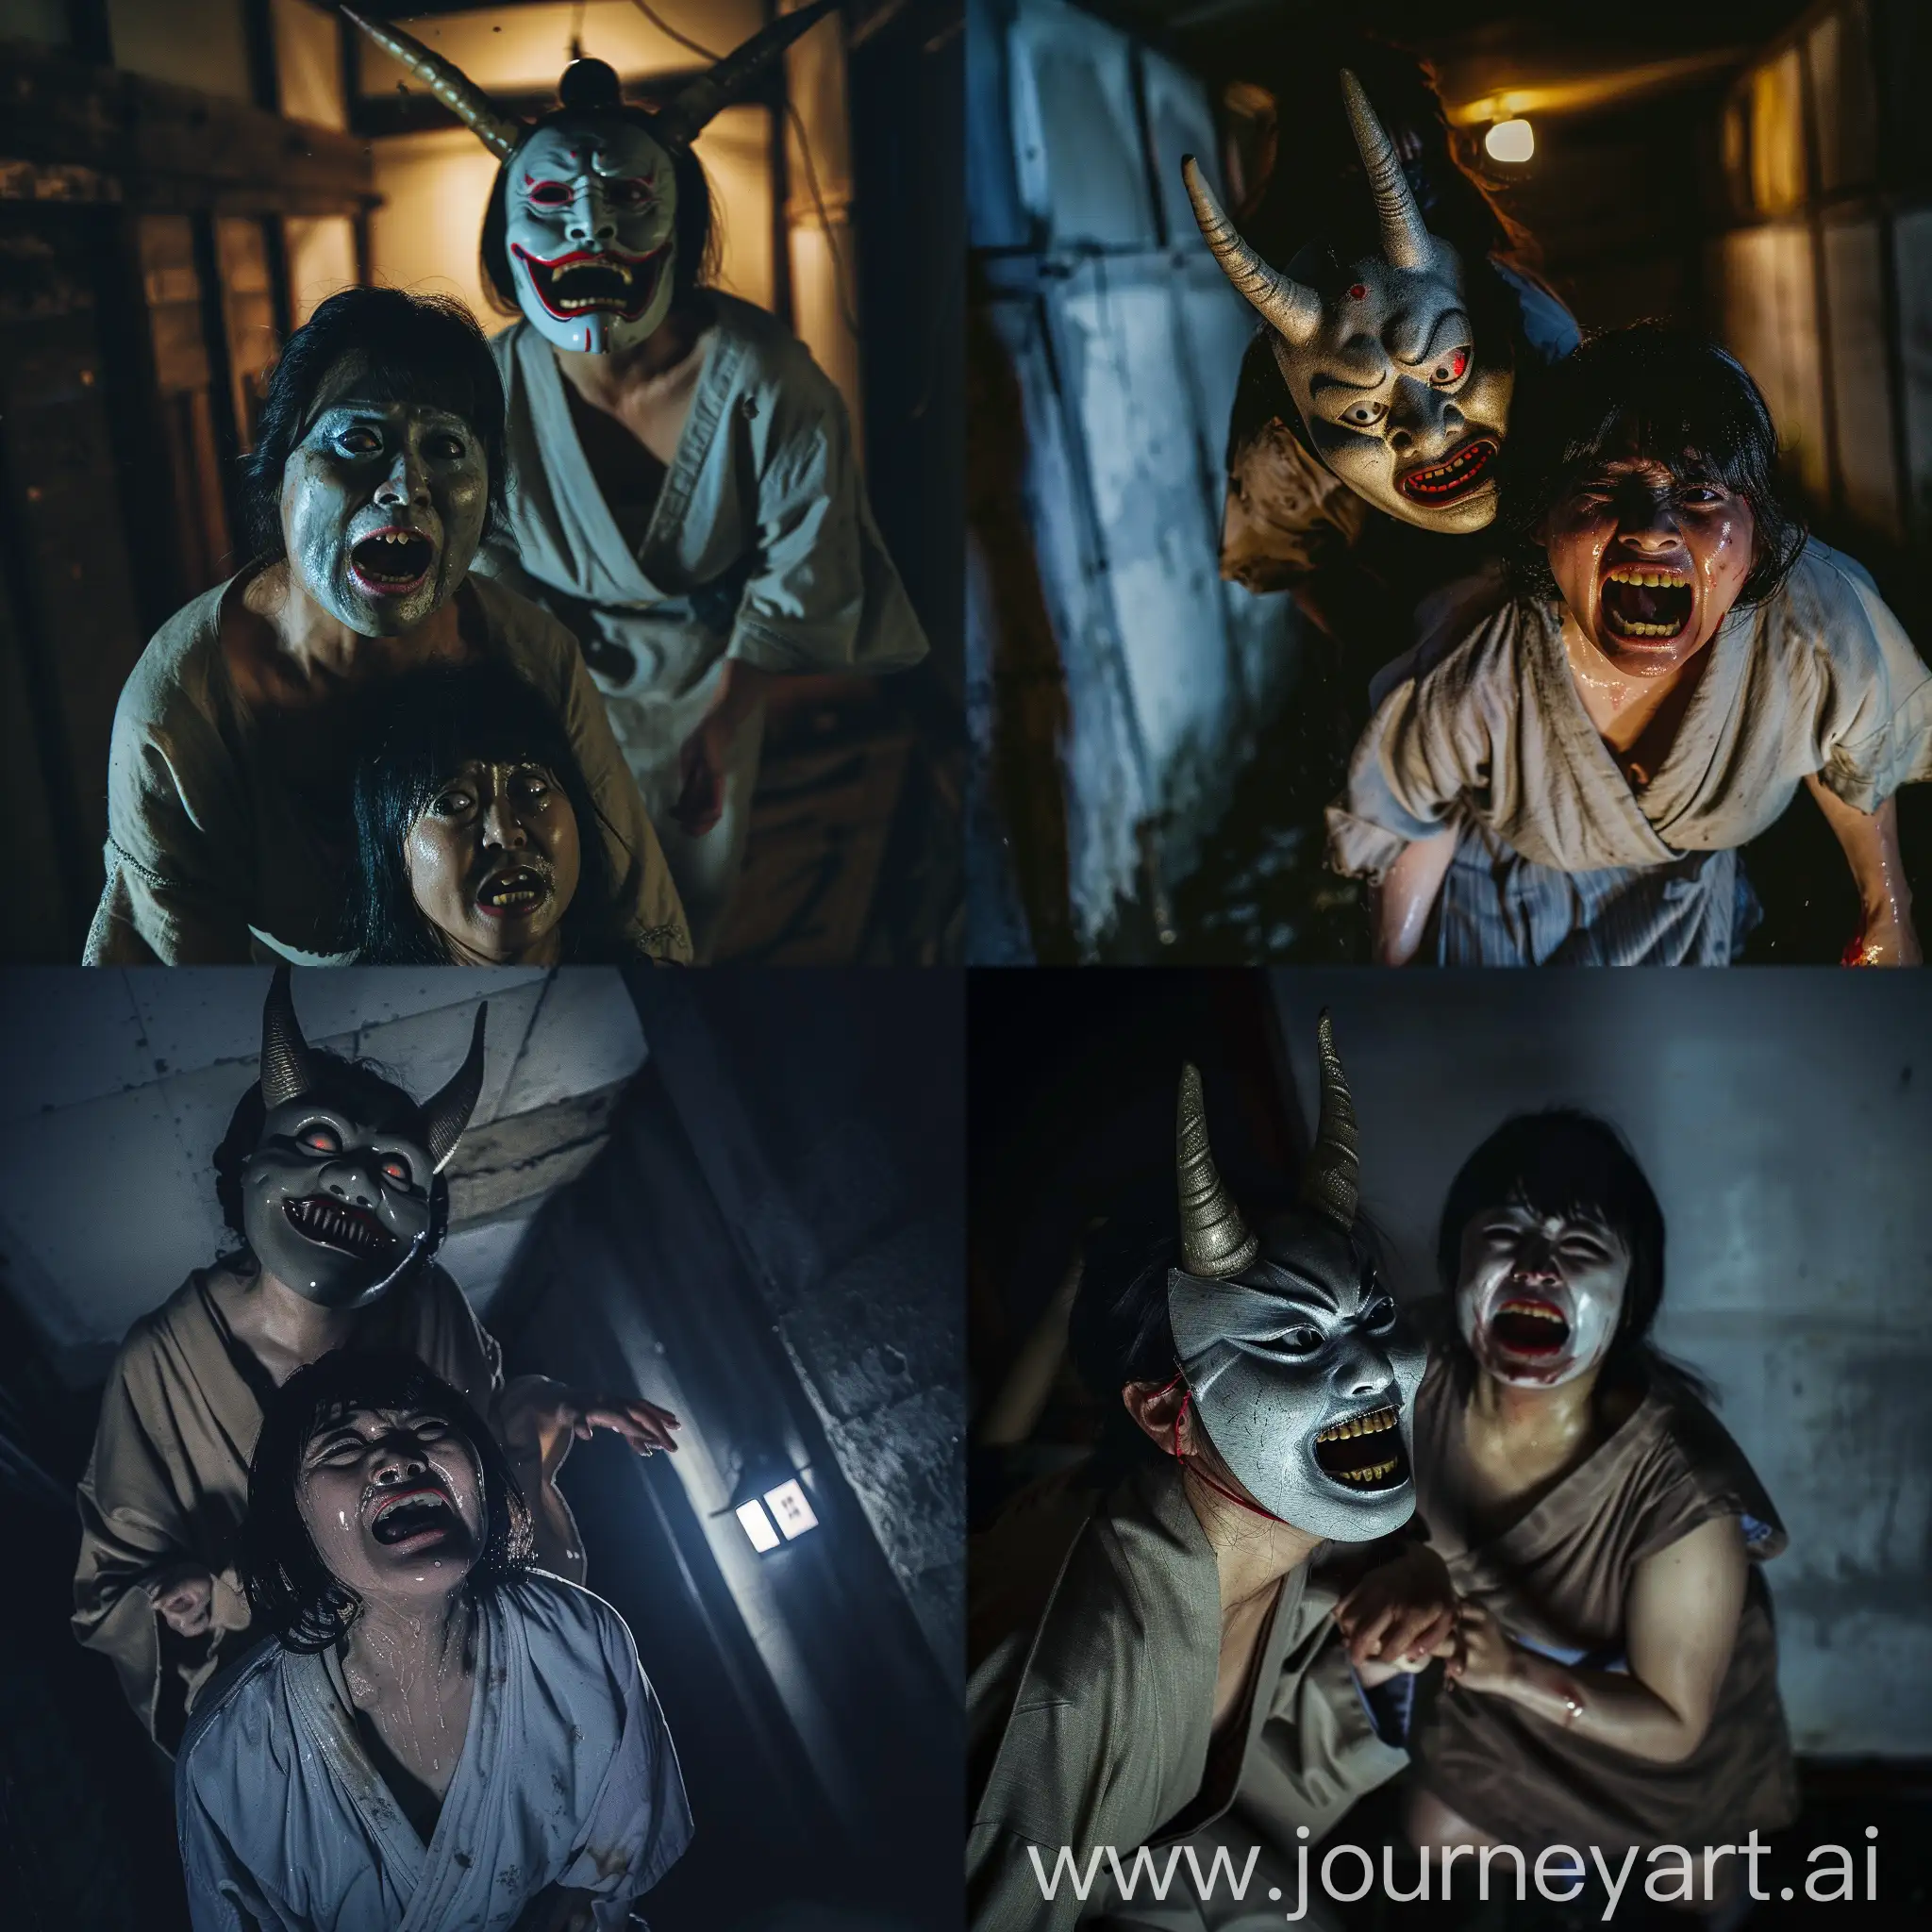 Japanese-Horror-Movie-Scene-Women-Chased-by-Masked-Figure-in-Dark-Basement